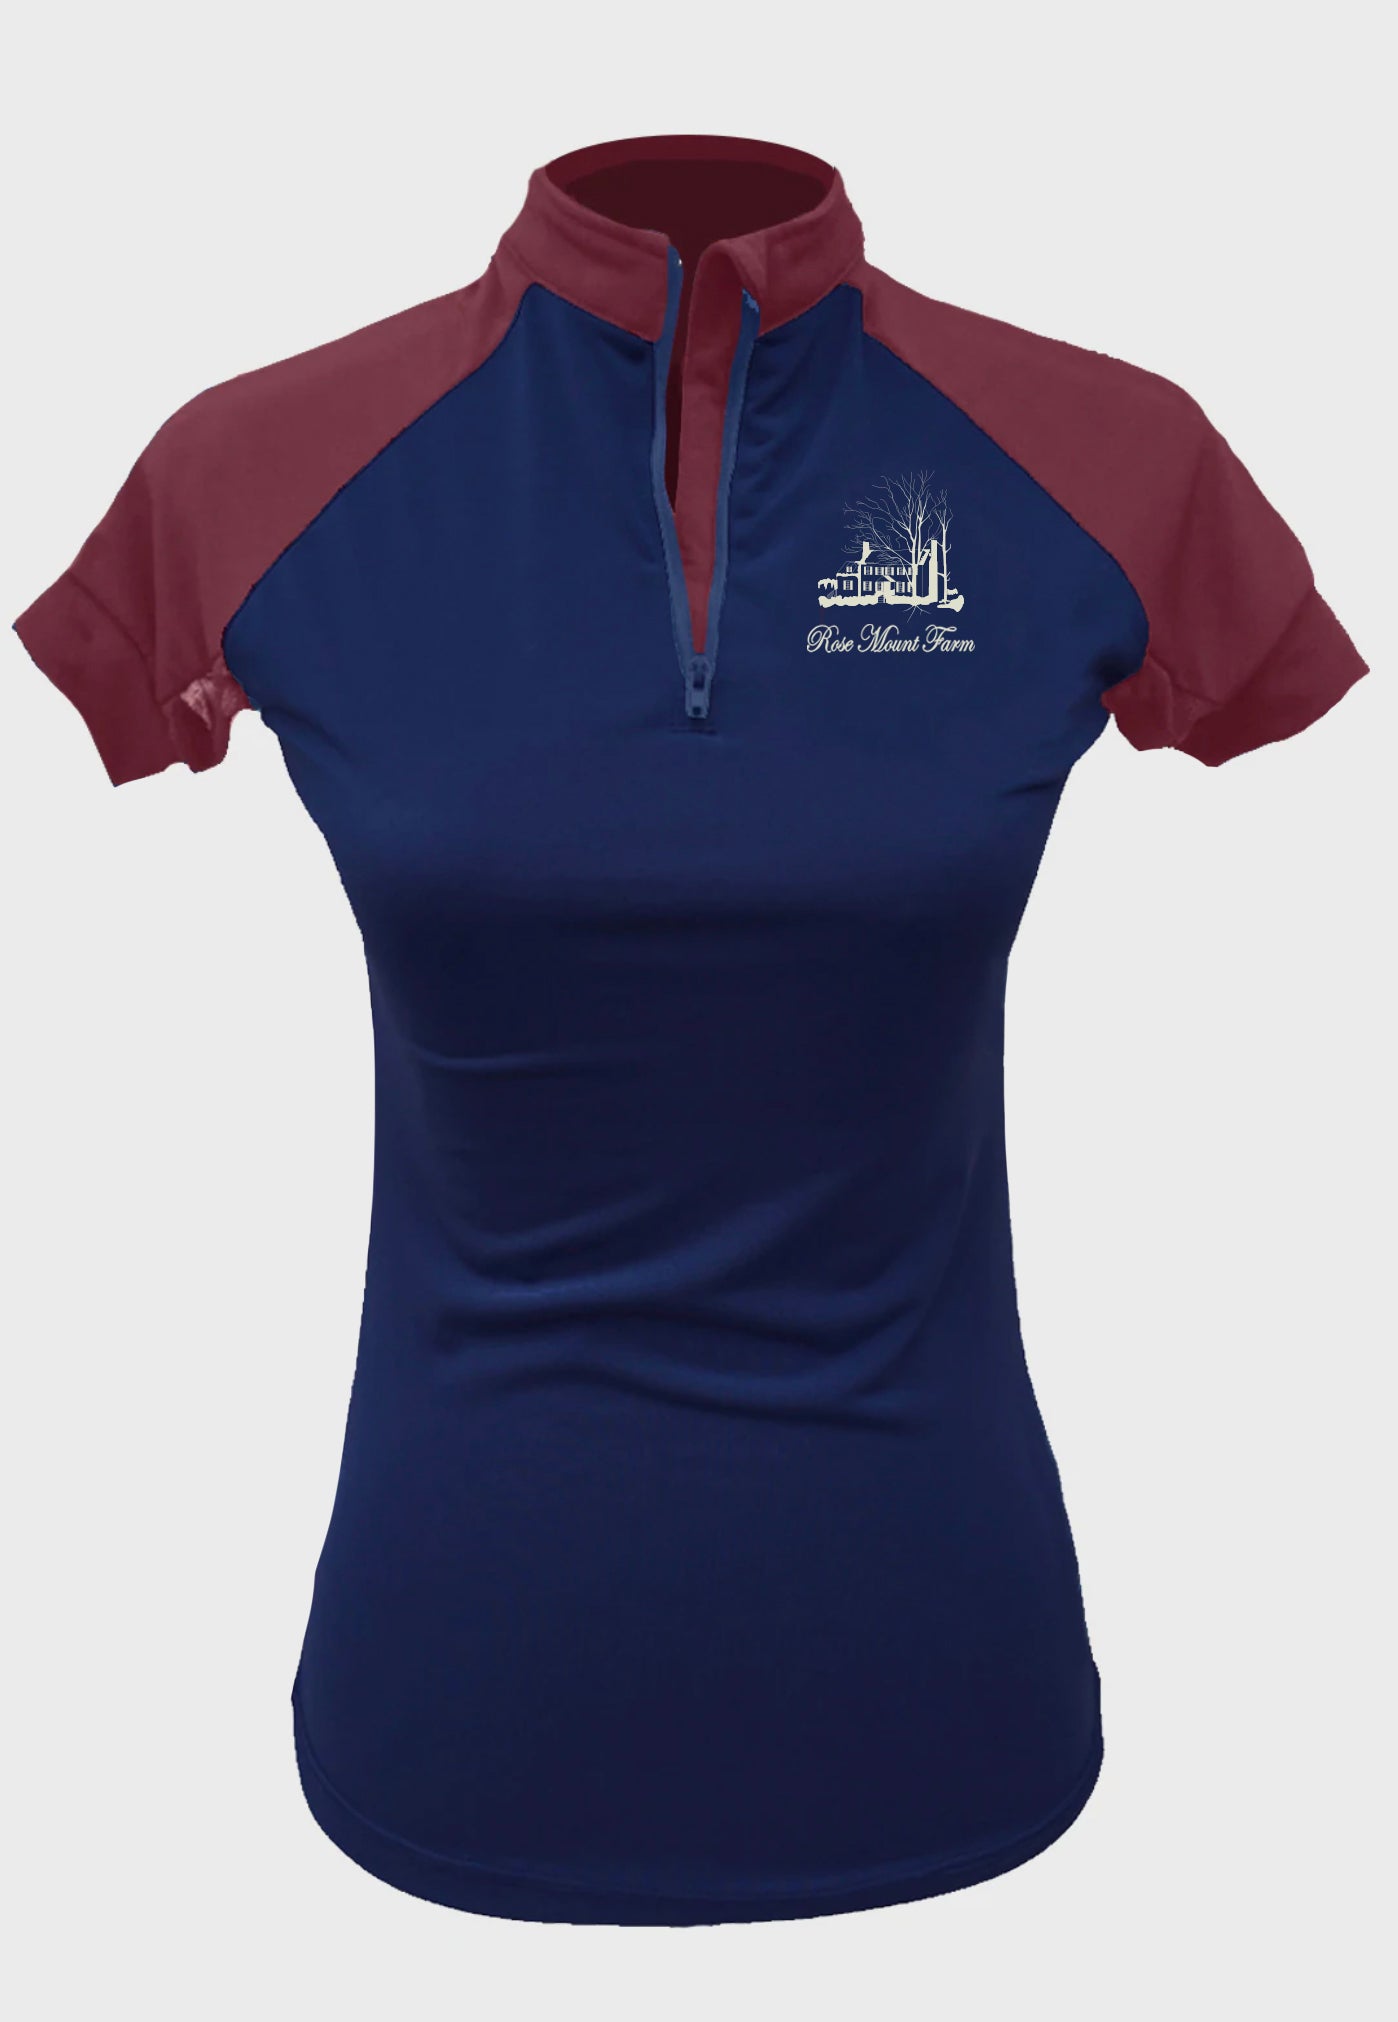 Rose Mount Farm Navy Short Sleeve Custom Sun Shirt,    Ladies + Youth Sizes